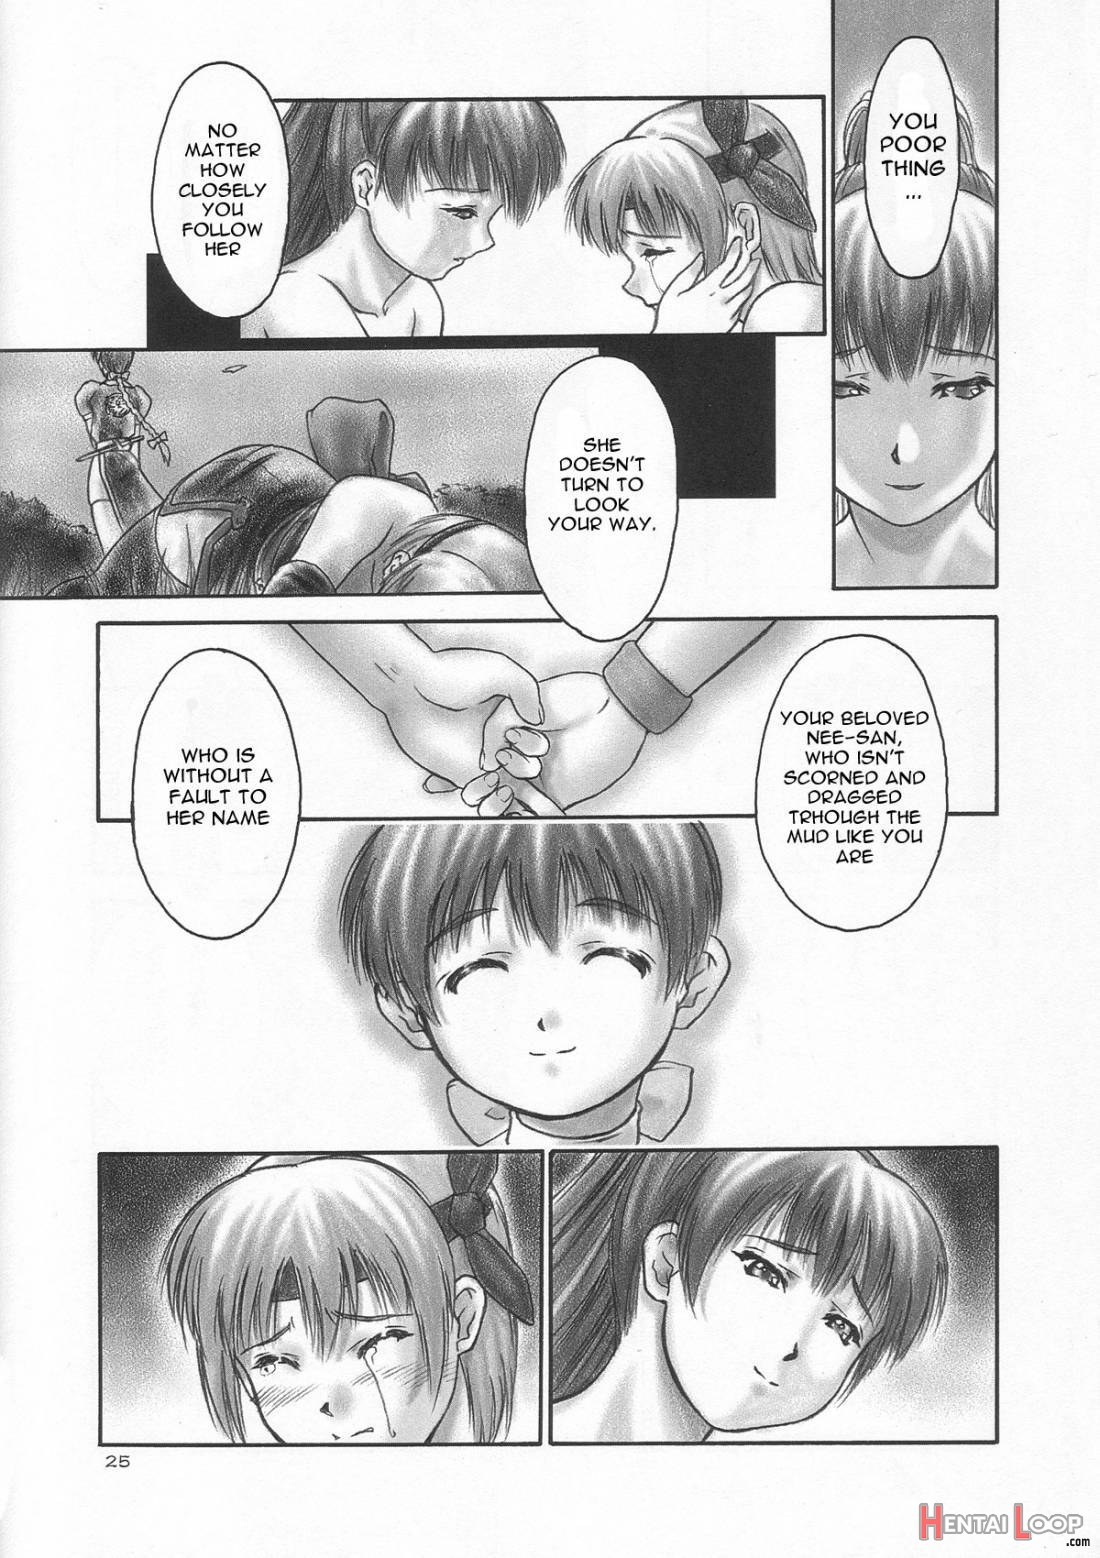 Inu/sequel page 22